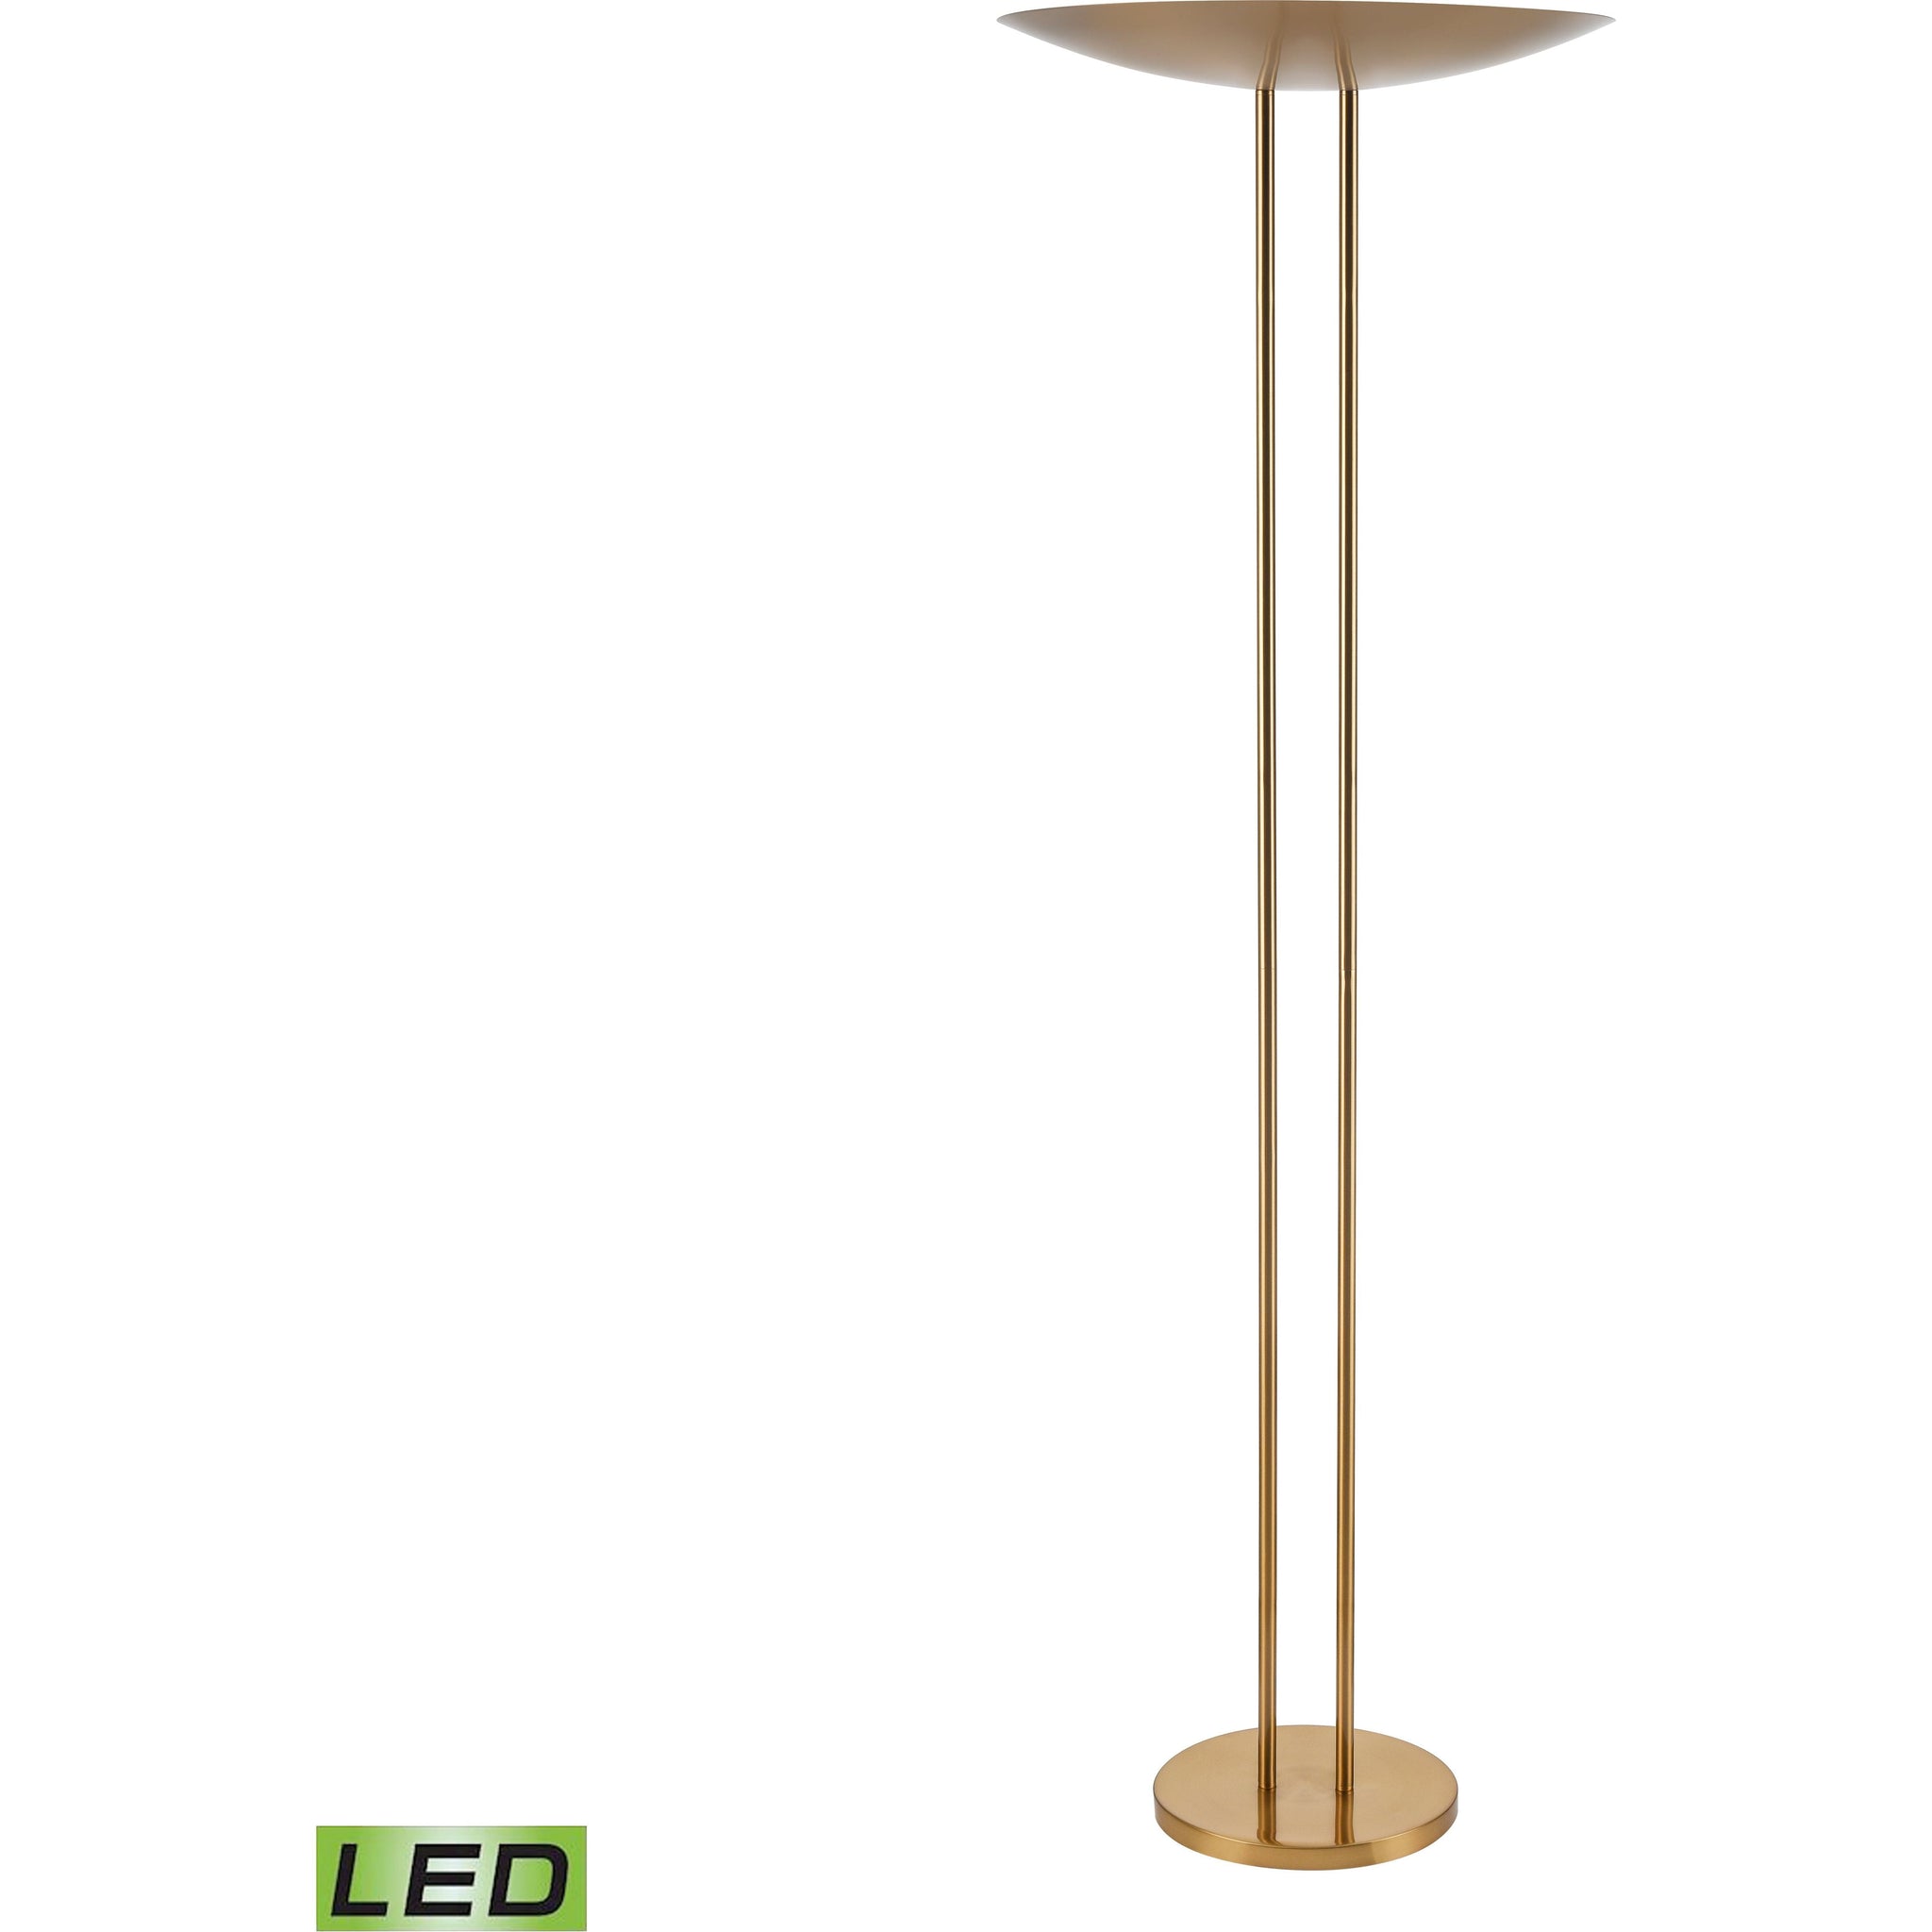 Marston 72" High 2-Light Floor Lamp